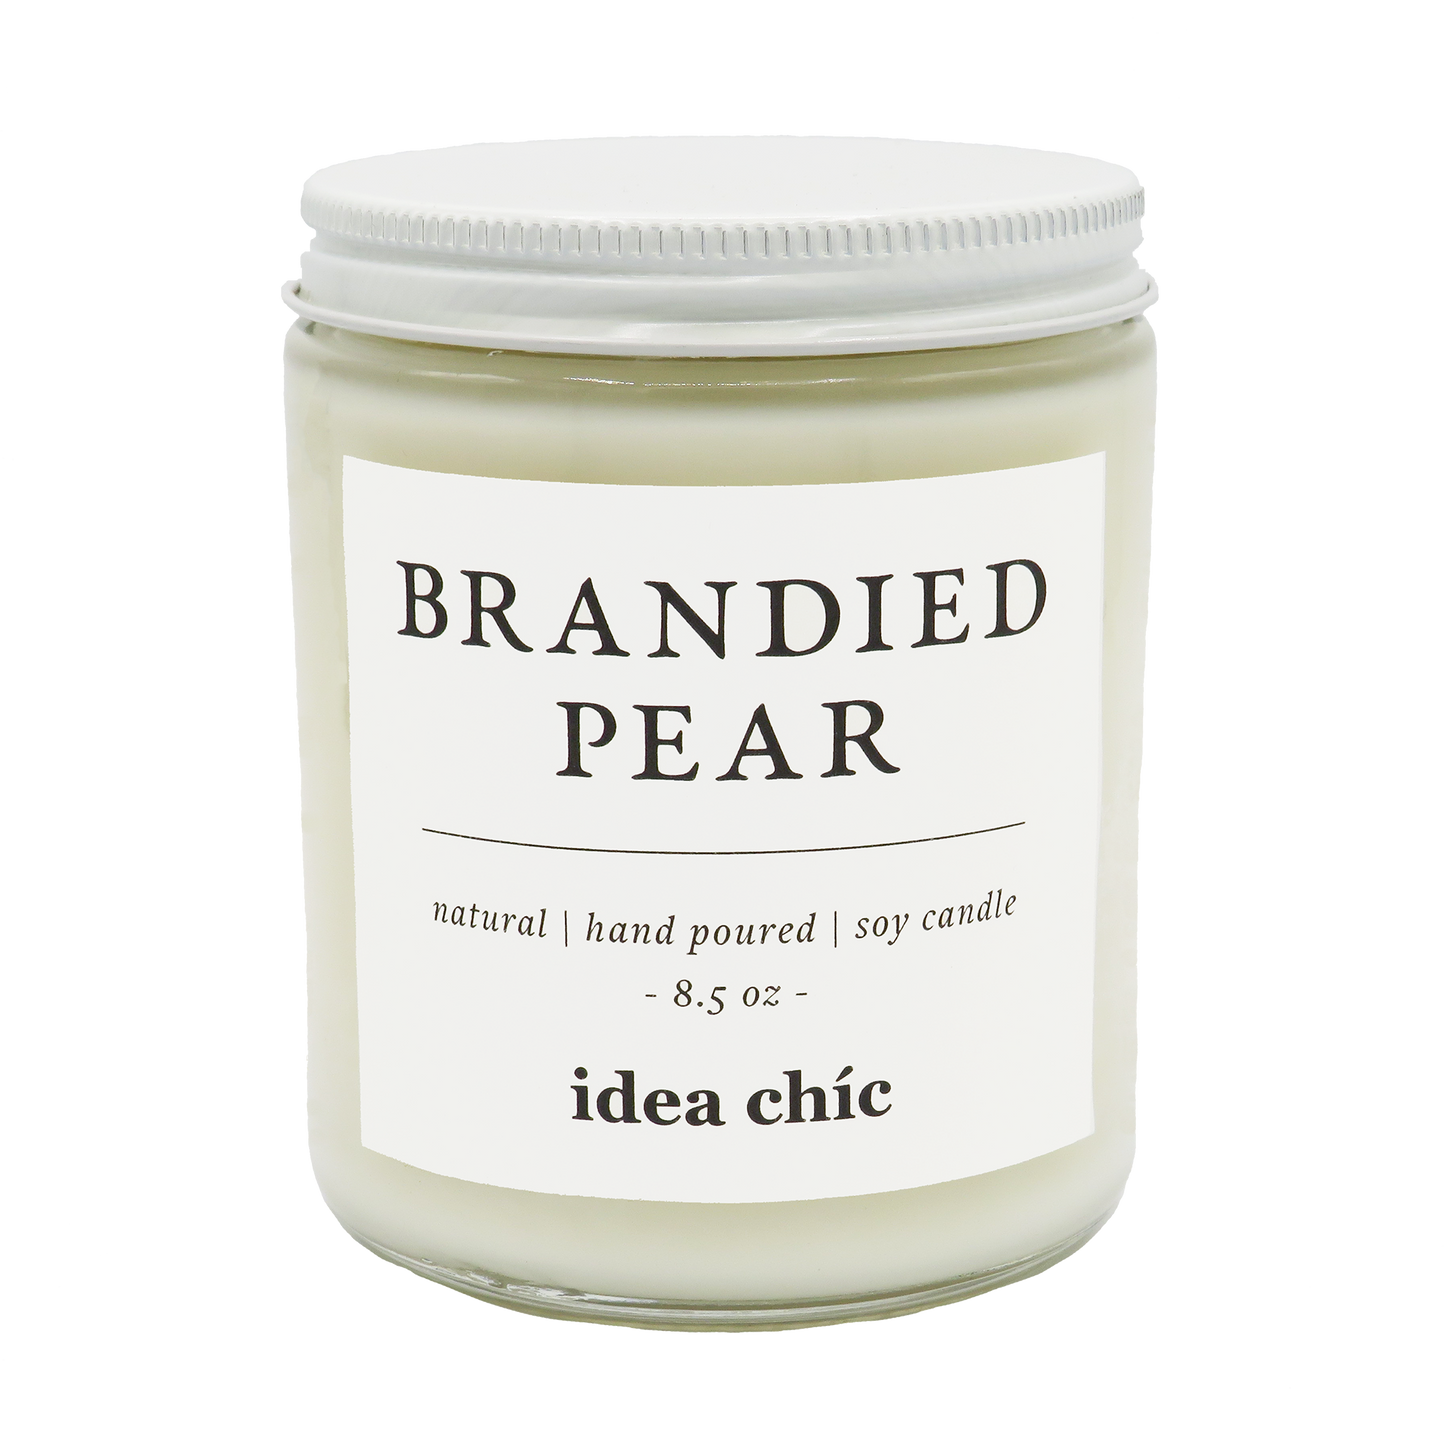 8.5 oz. Brandied Pear Candle Glass Jar